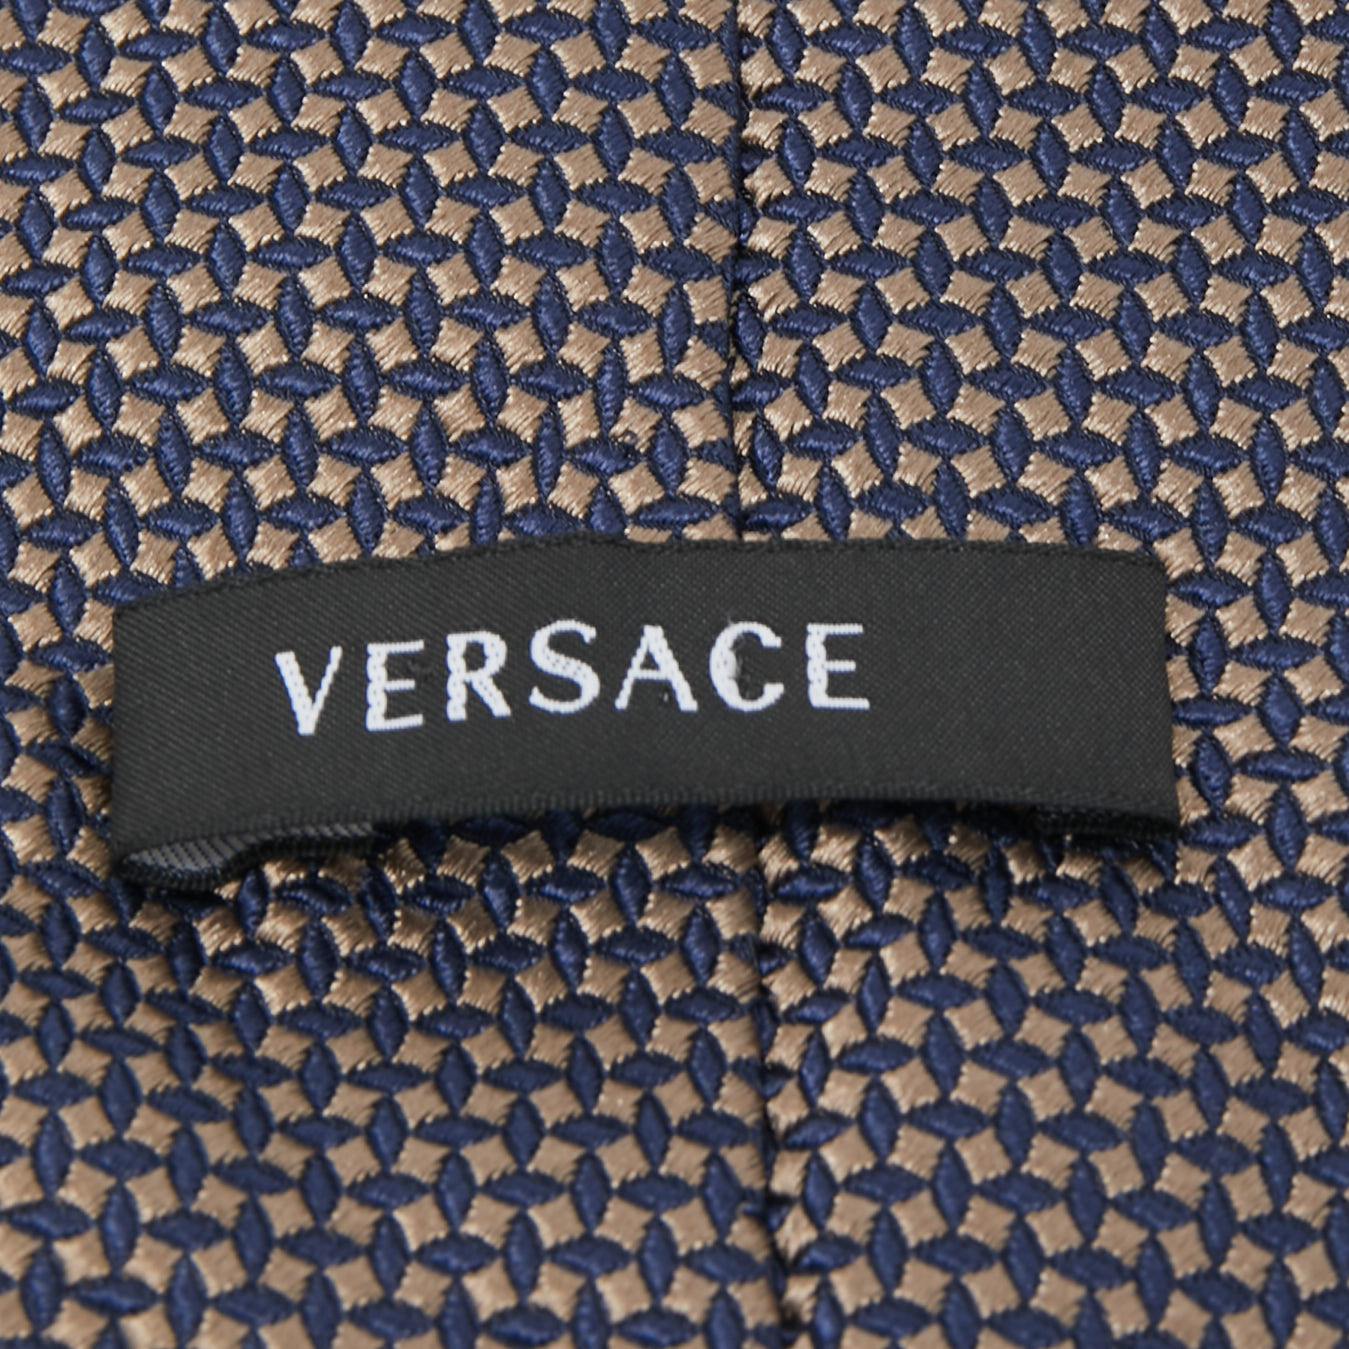 Versace Navy Blue Patterned Silk Jacquard Tie